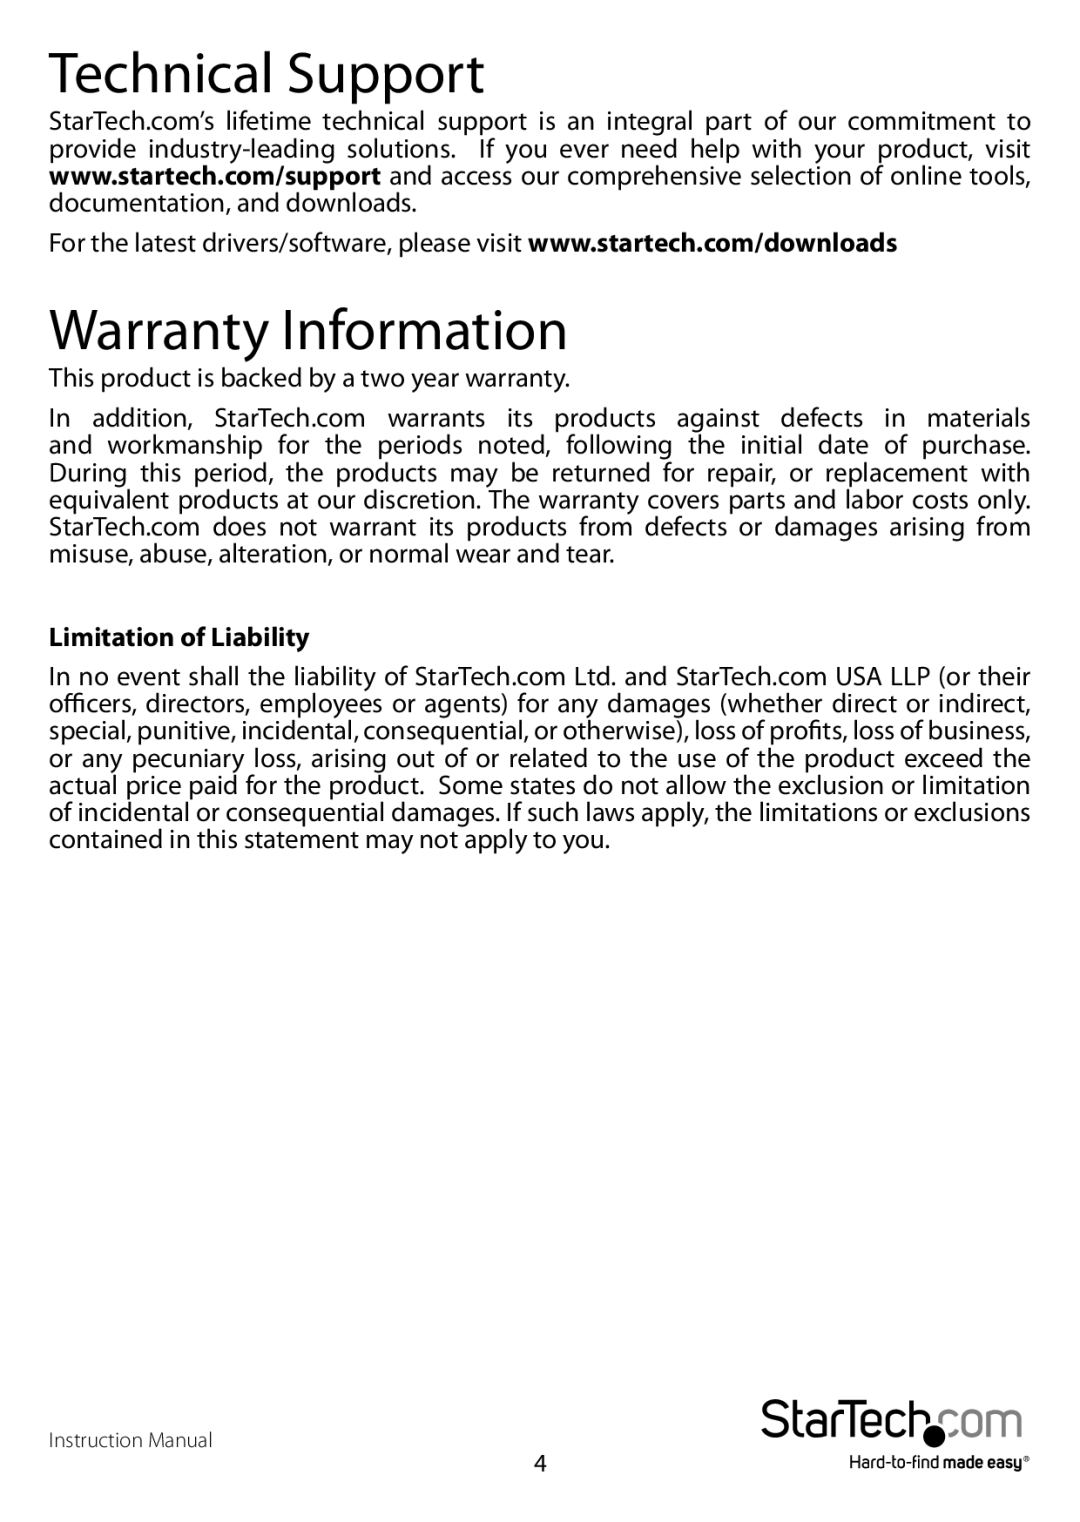 StarTech.com startech manual Technical Support, Warranty Information, Limitation of Liability 